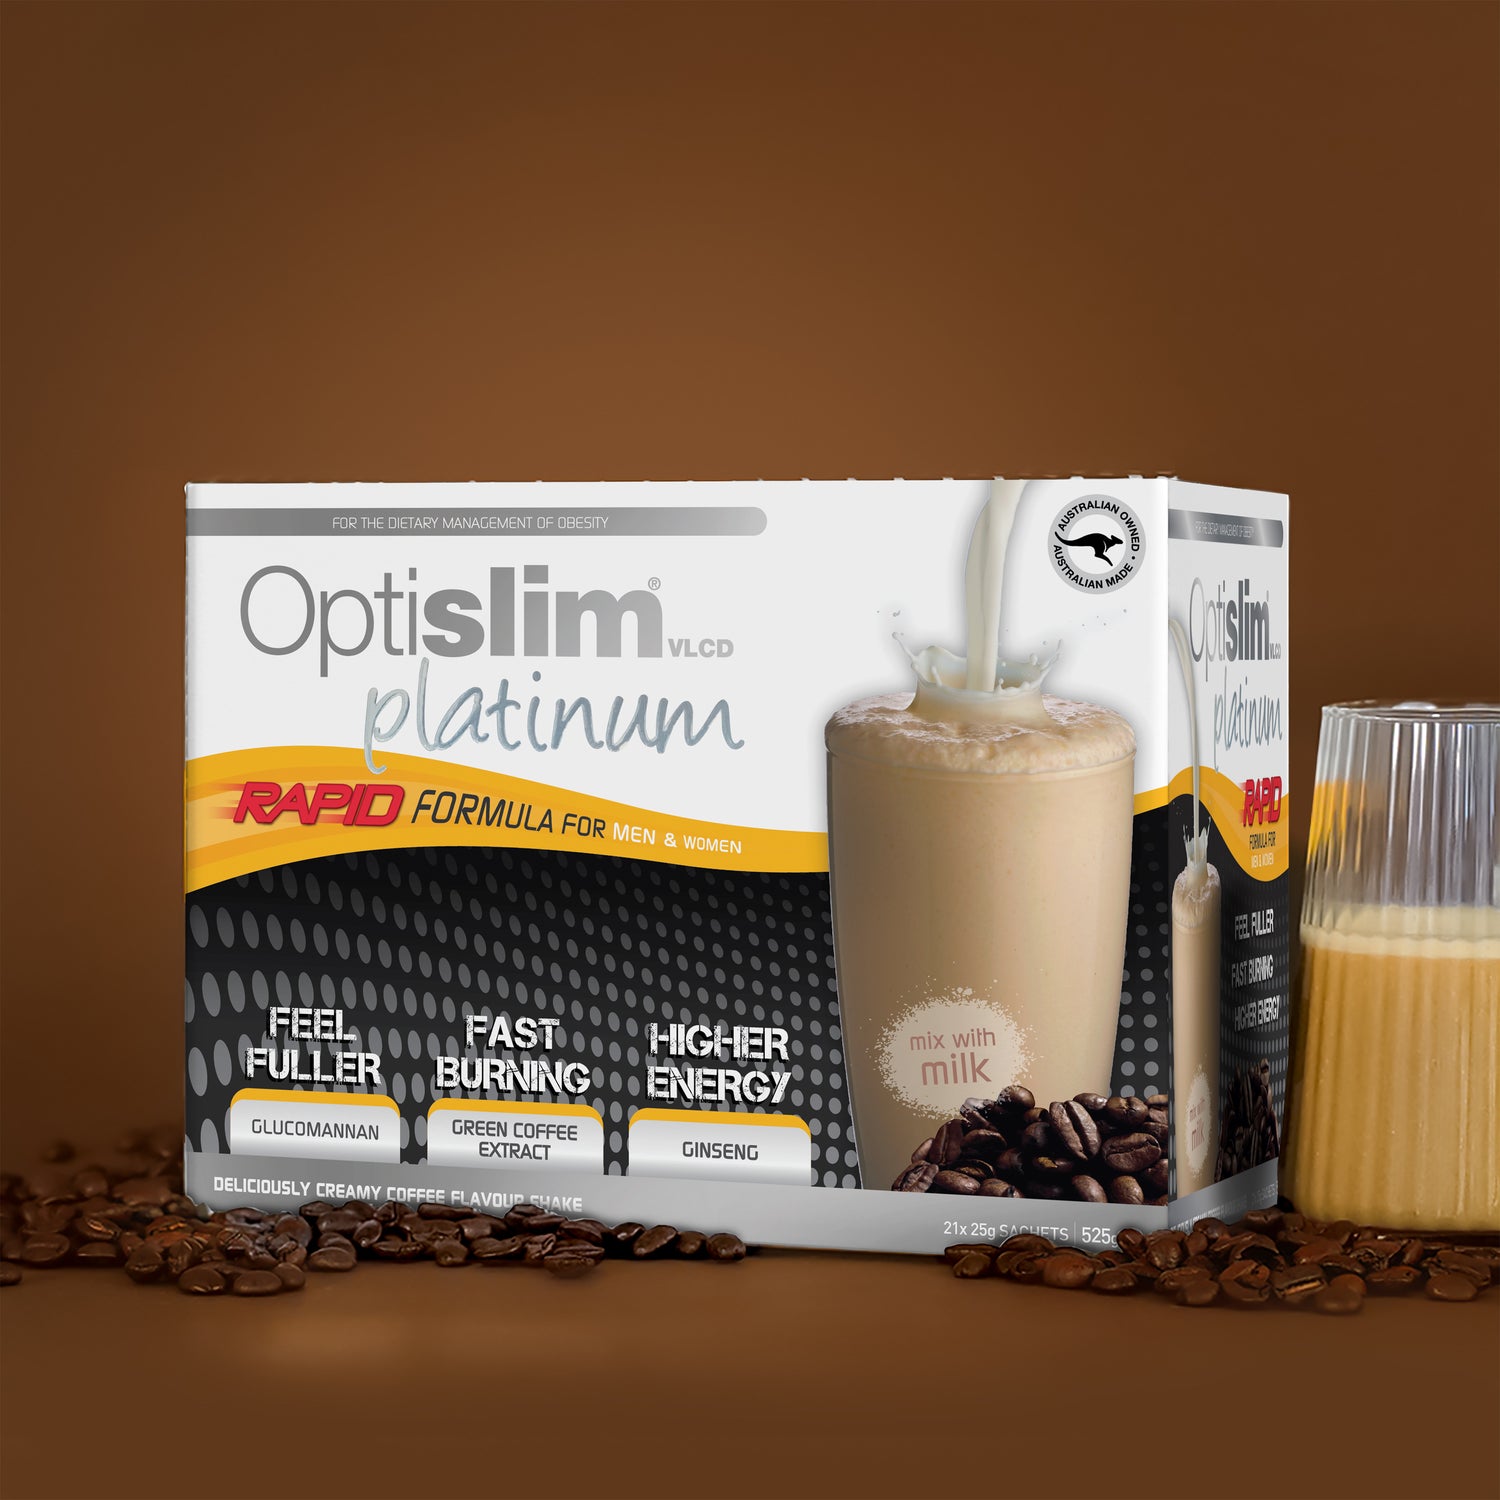 VLCD PLATINUM Shake Coffee - Optislim